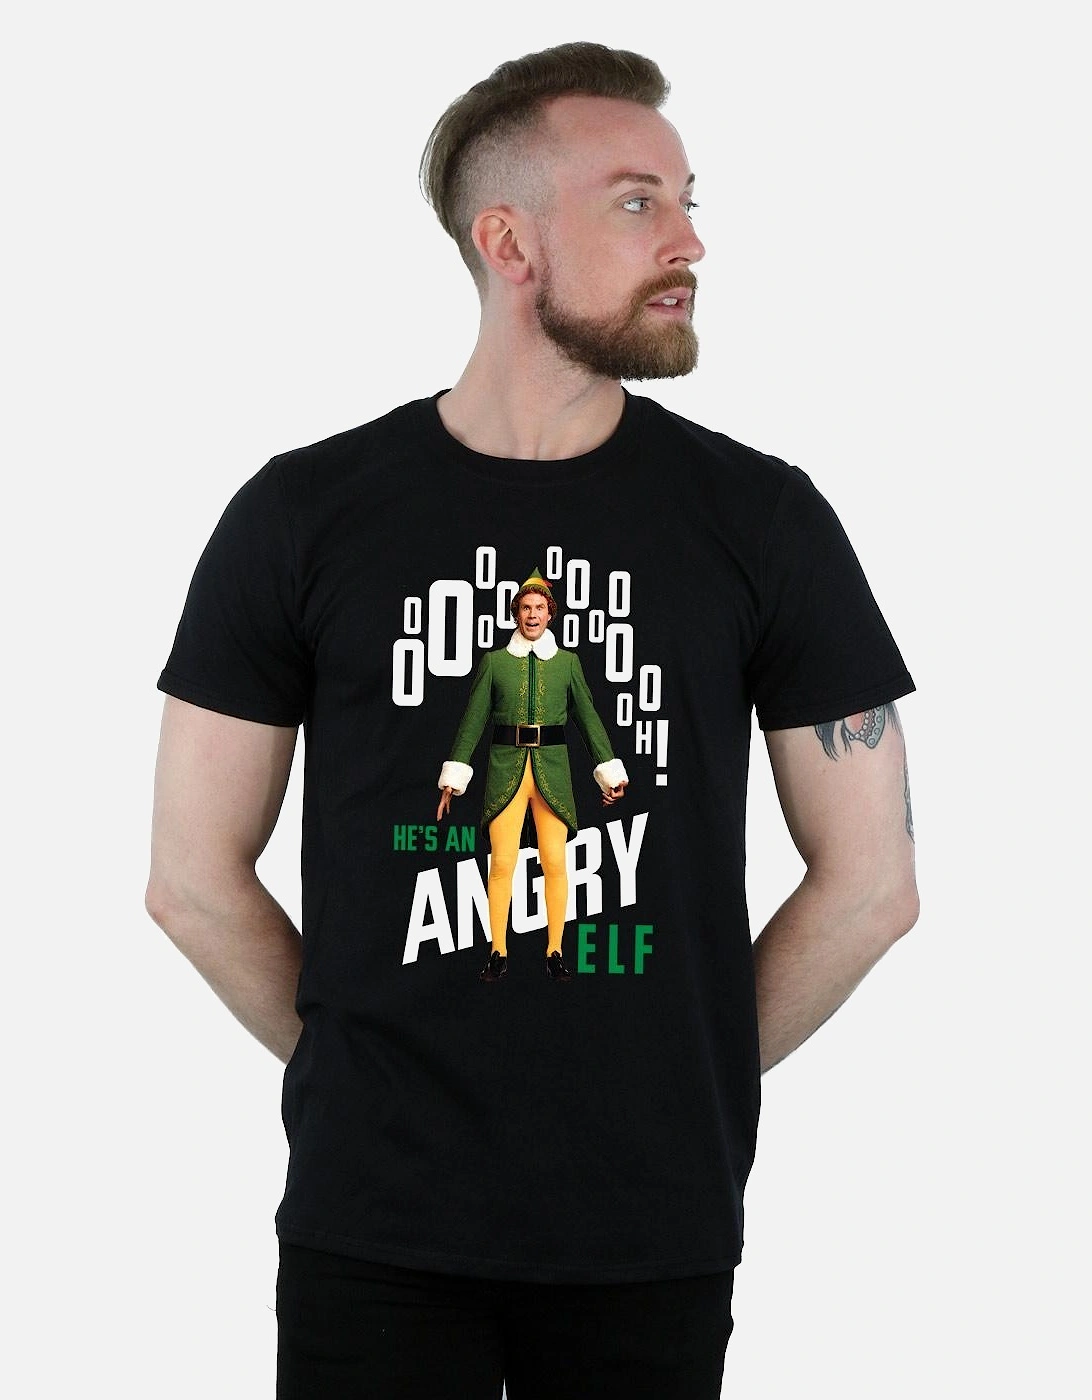 Mens Angry T-Shirt